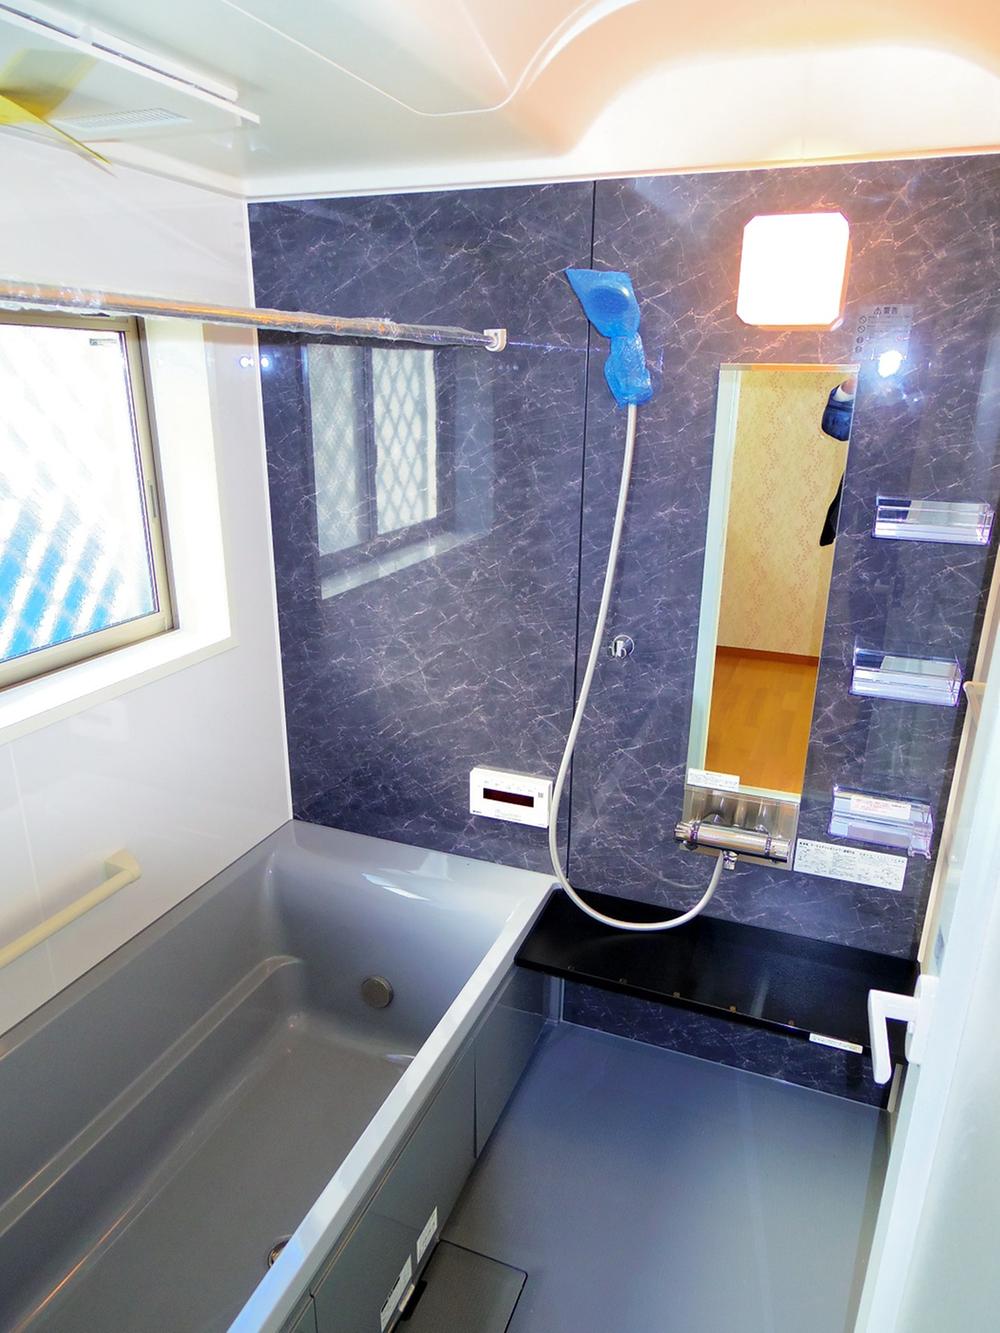 Bathroom. With bathroom ventilation dryer